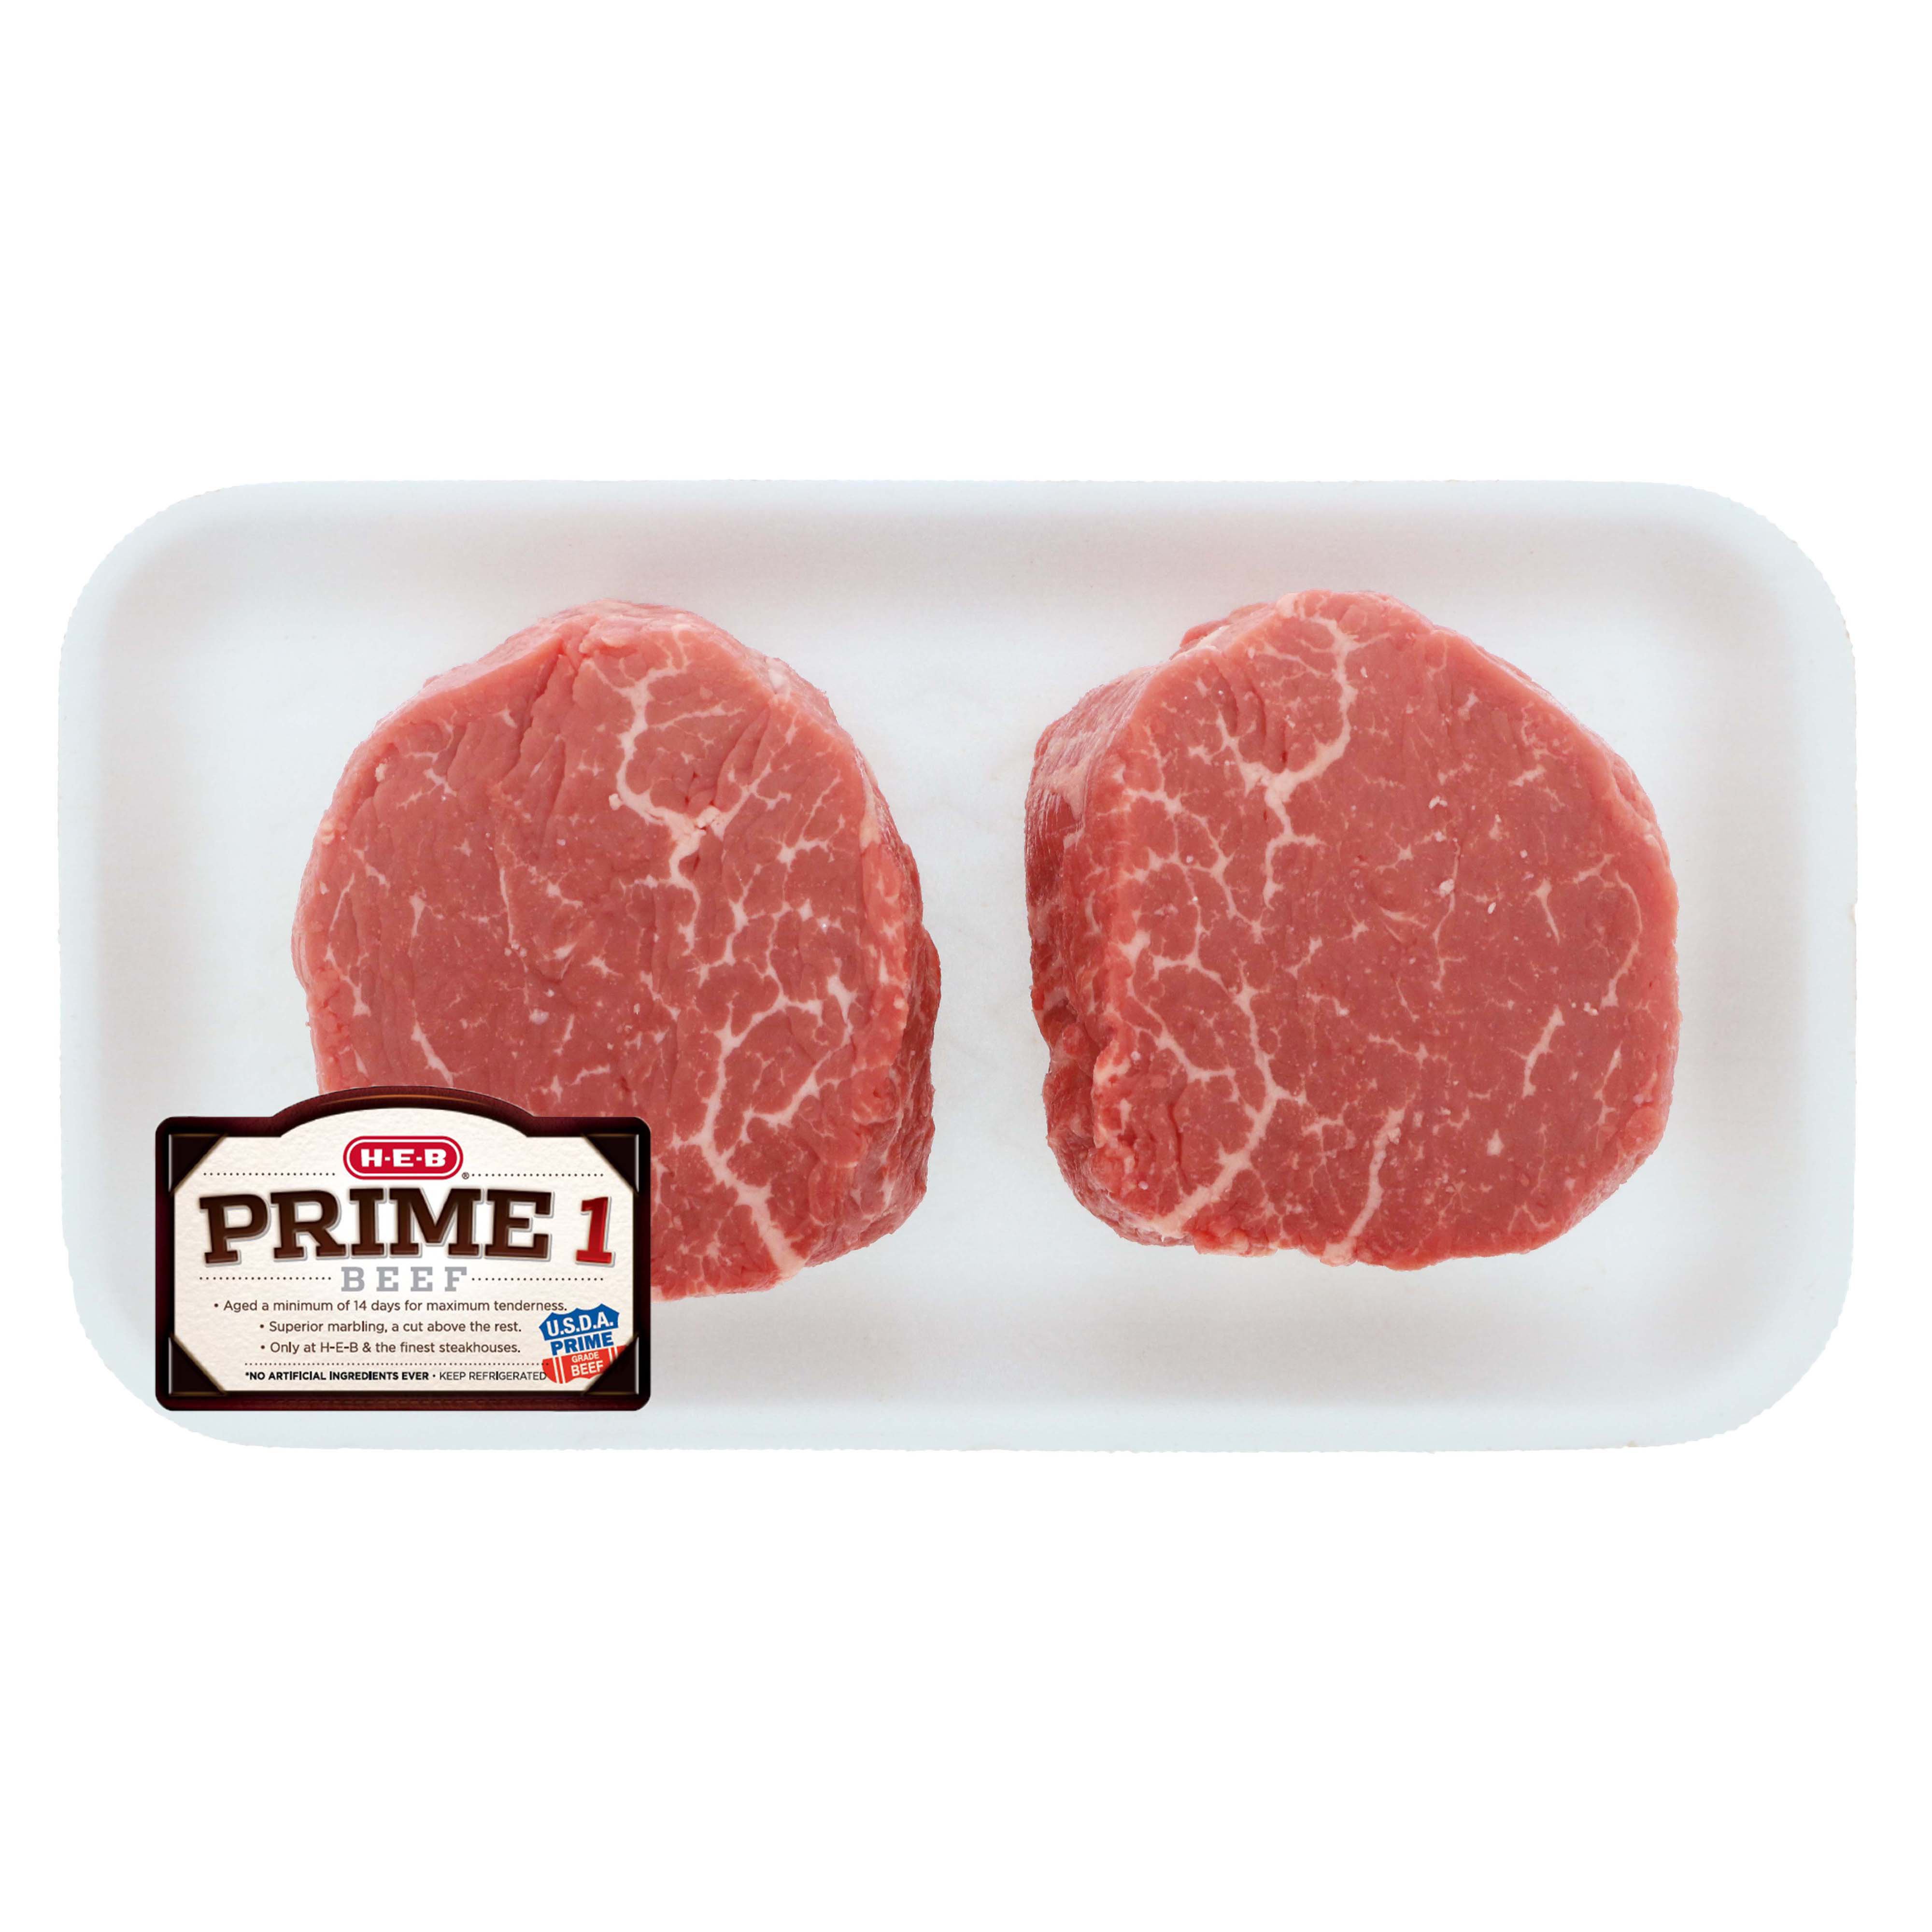 H-E-B Prime 1 Beef Tenderloin Steaks Special Trim, USDA Prime